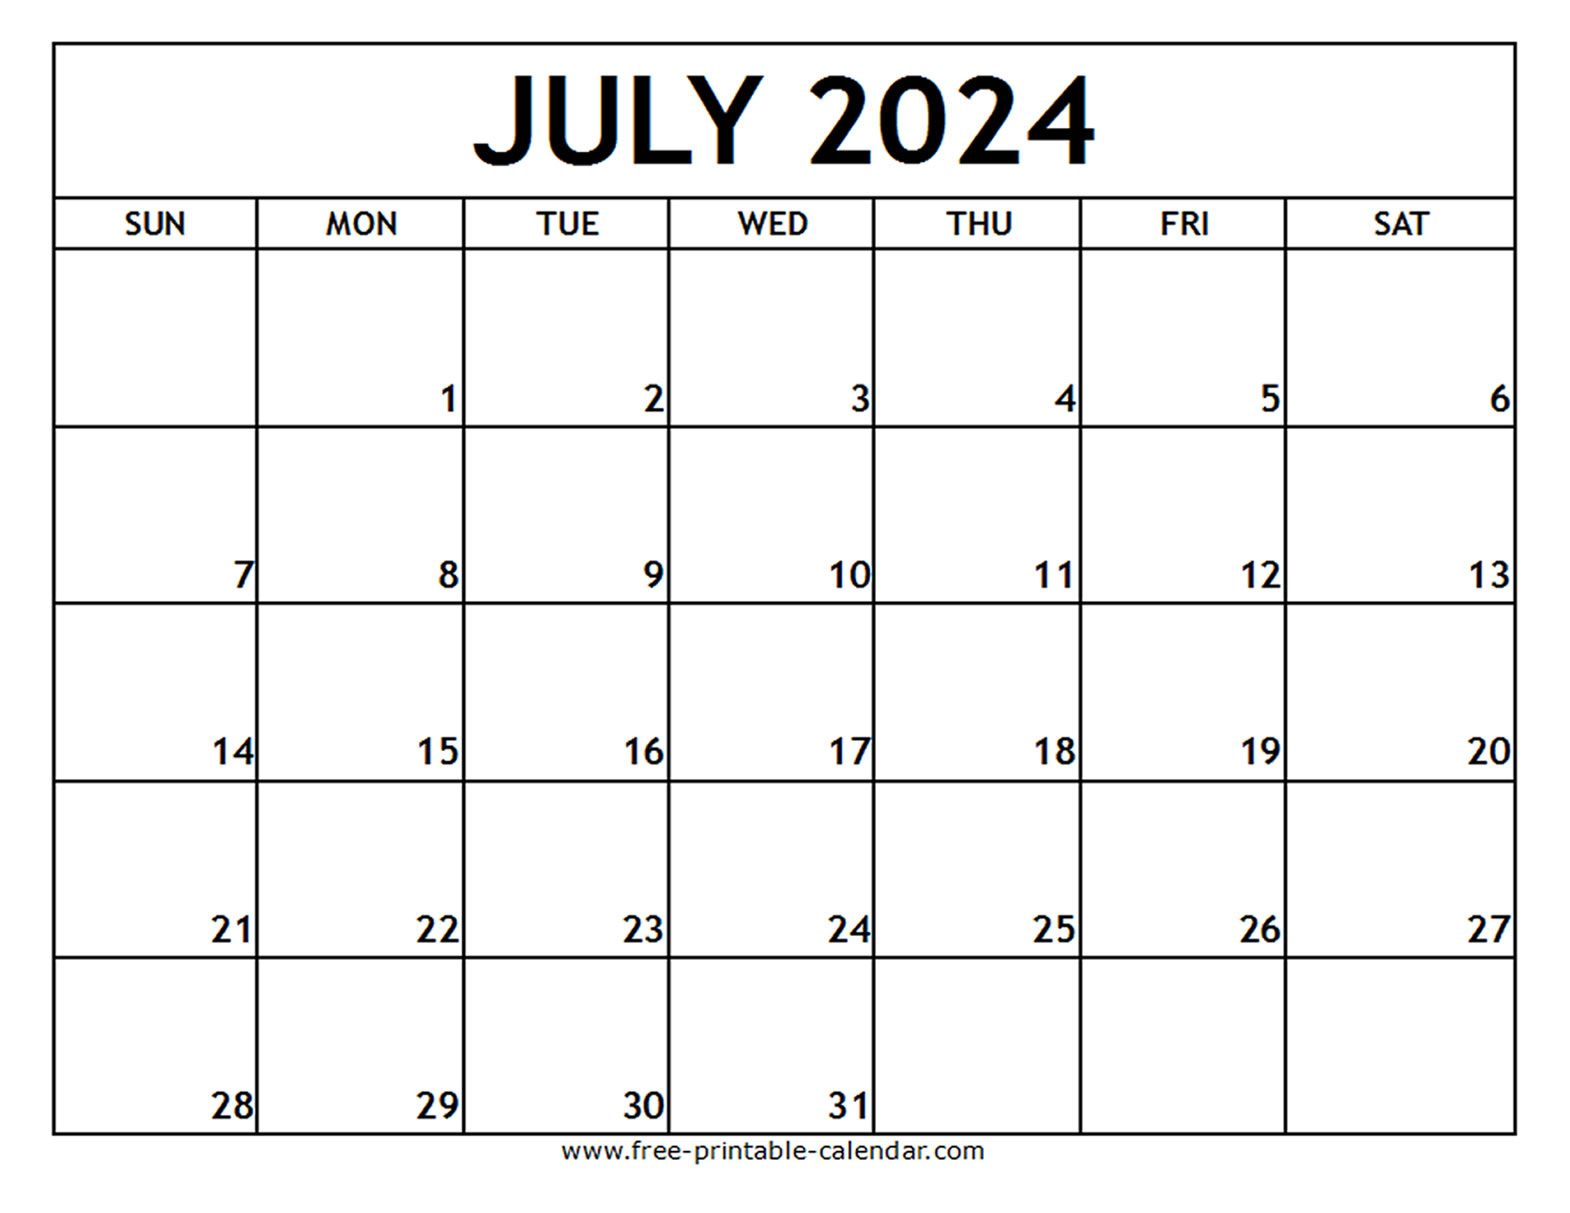 July 2024 Printable Calendar - Free-Printable-Calendar | Free July 2024 Calendar Printable